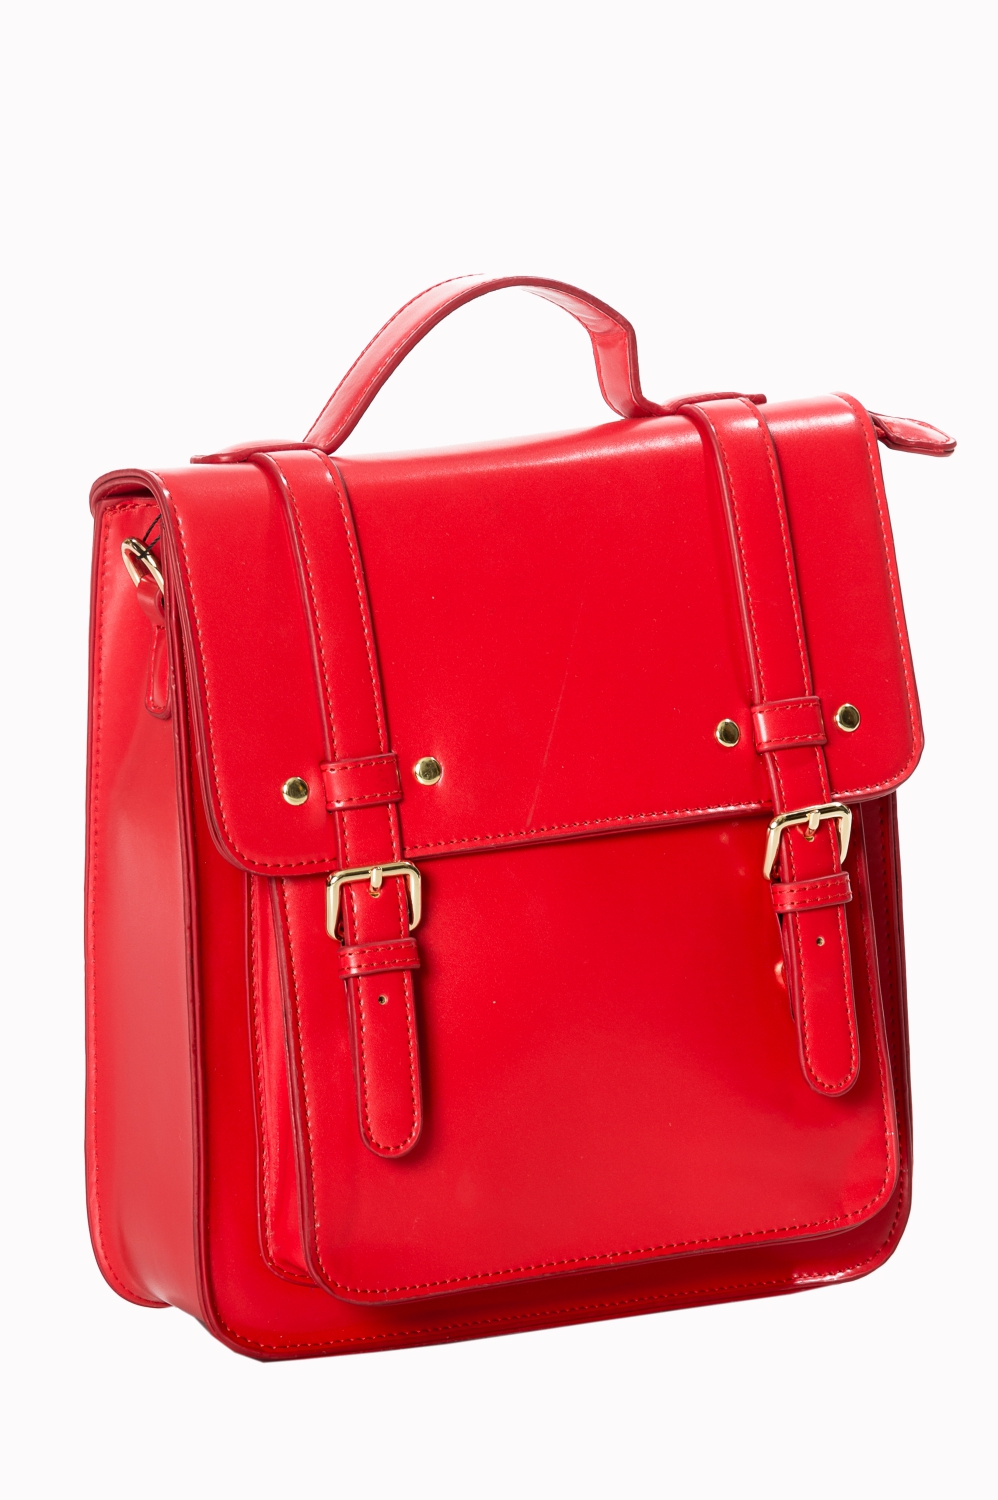 Banned Retro 60s Cohen Red Handbag